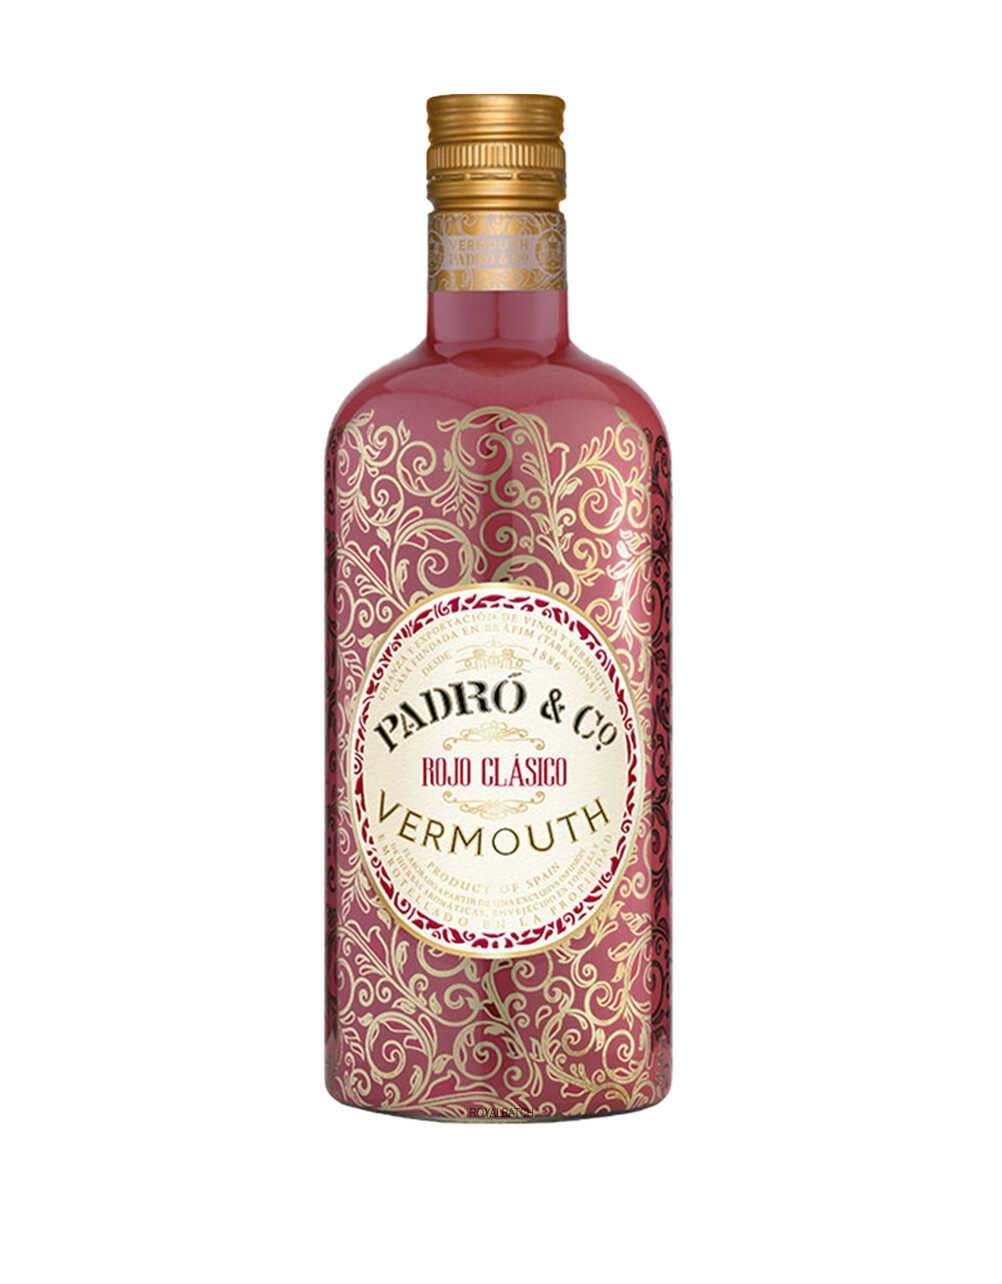 Padro and Co Rojo Clasico Vermouth